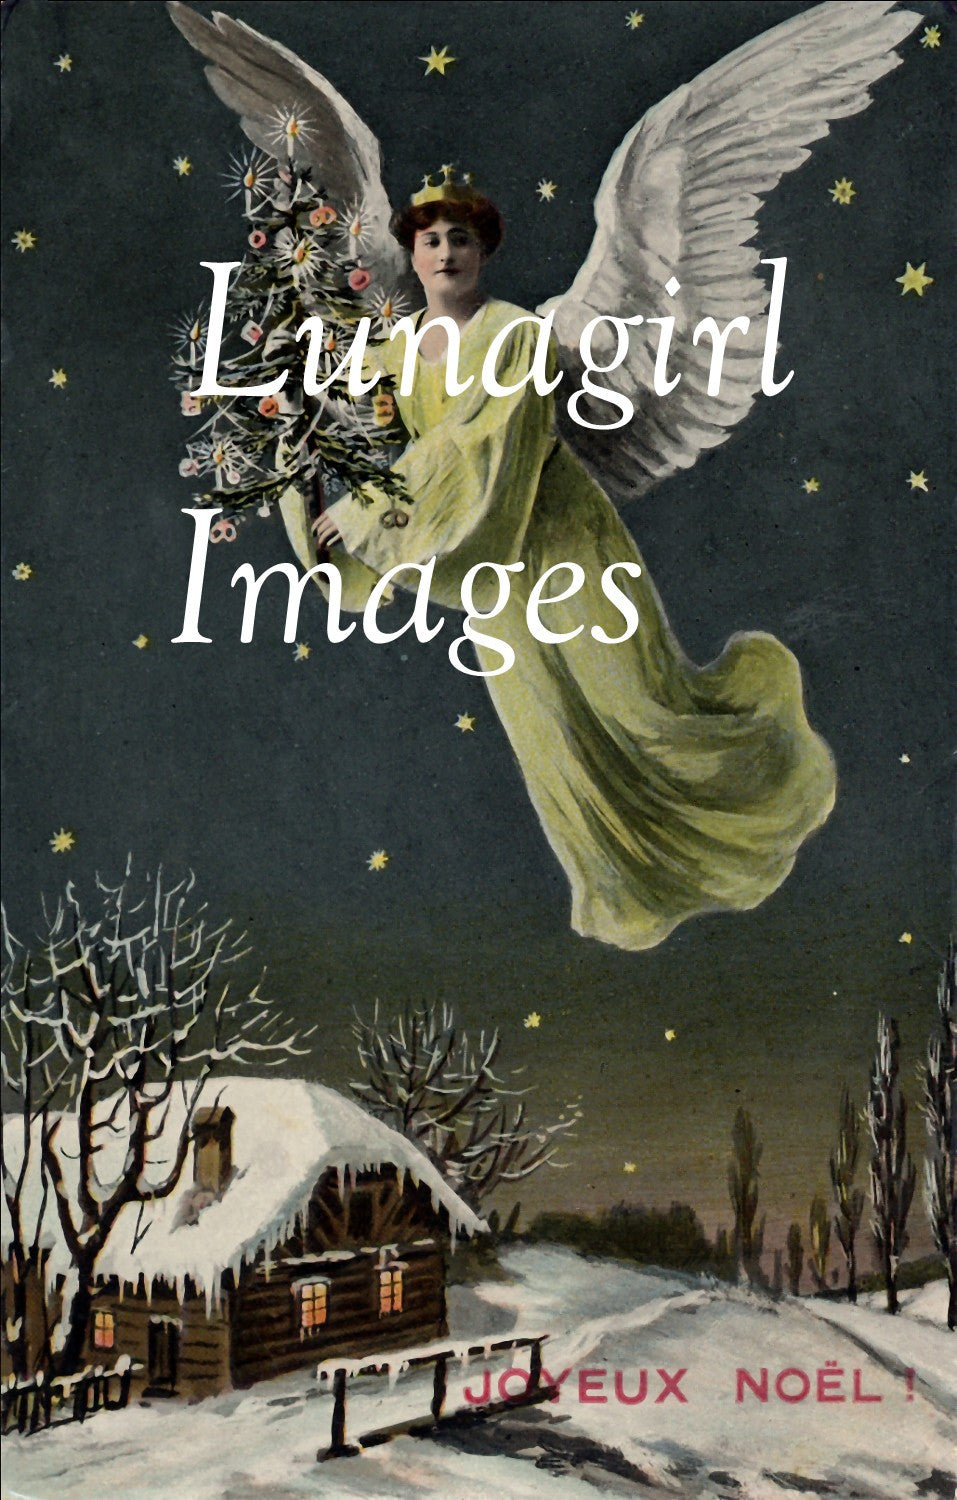 Christmas New Years Photos Postcards: 250 Images - Lunagirl